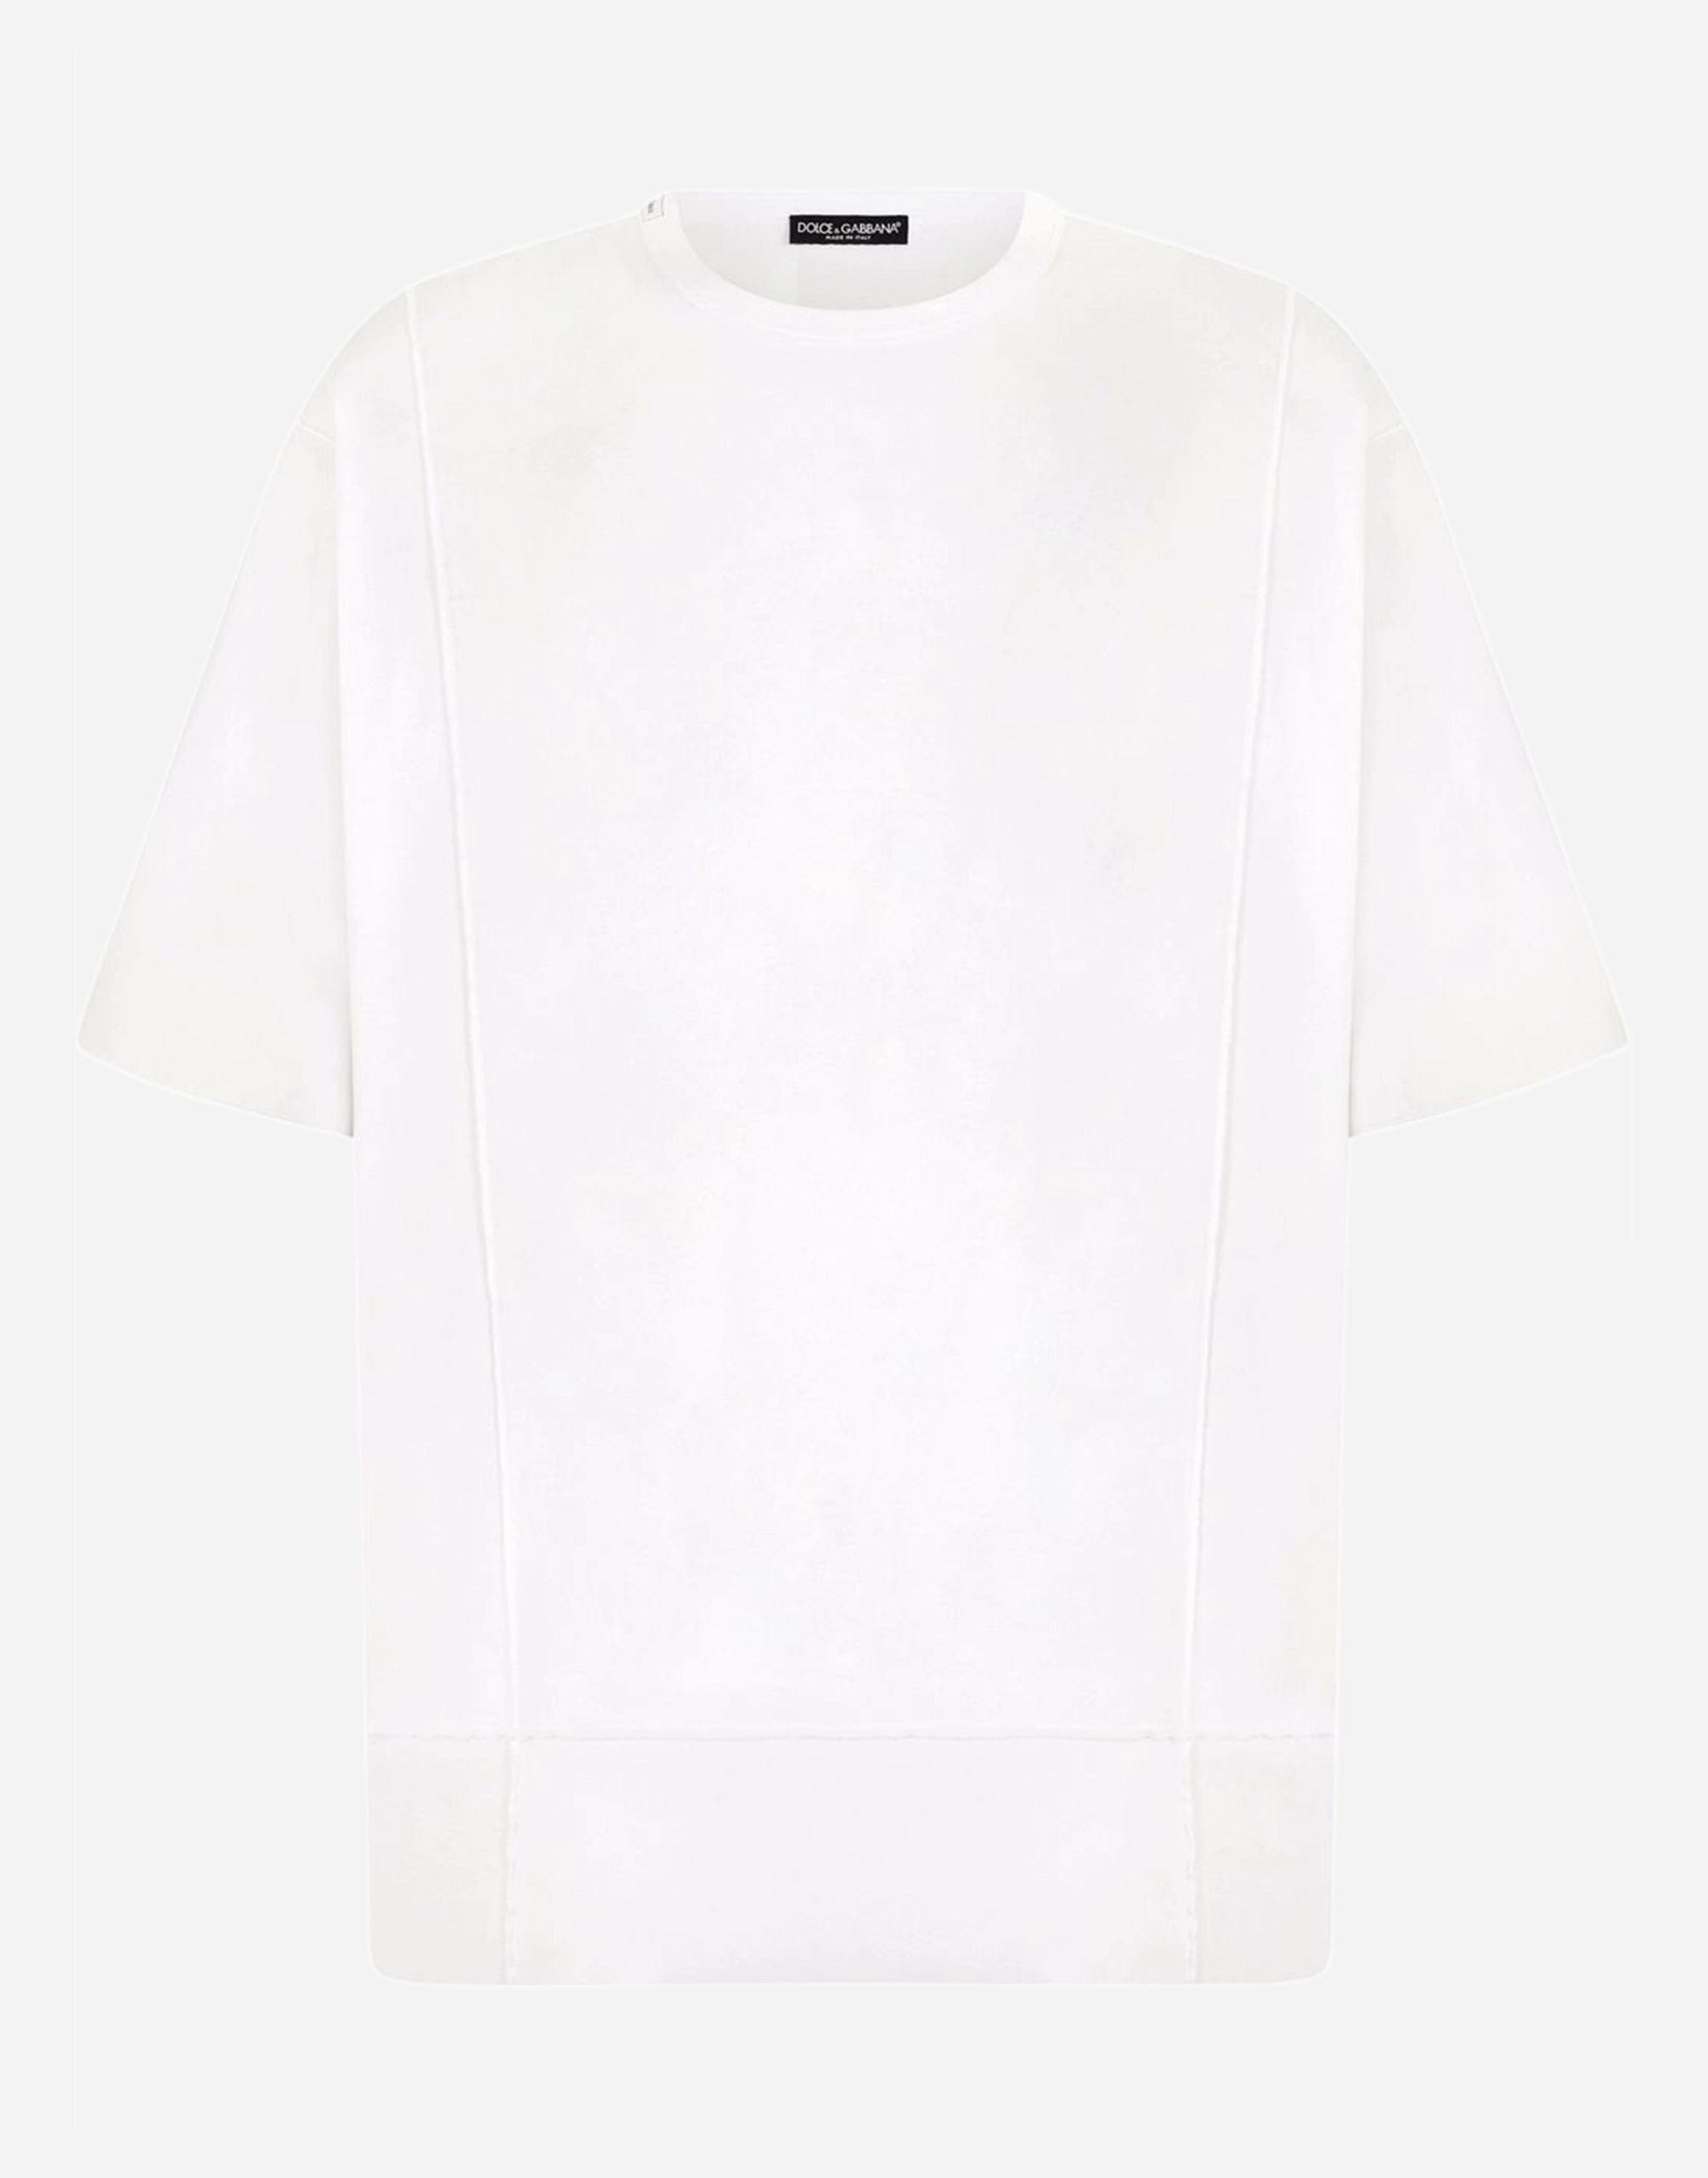 Dolce & Gabbana Cotton T-shirt With DG Print